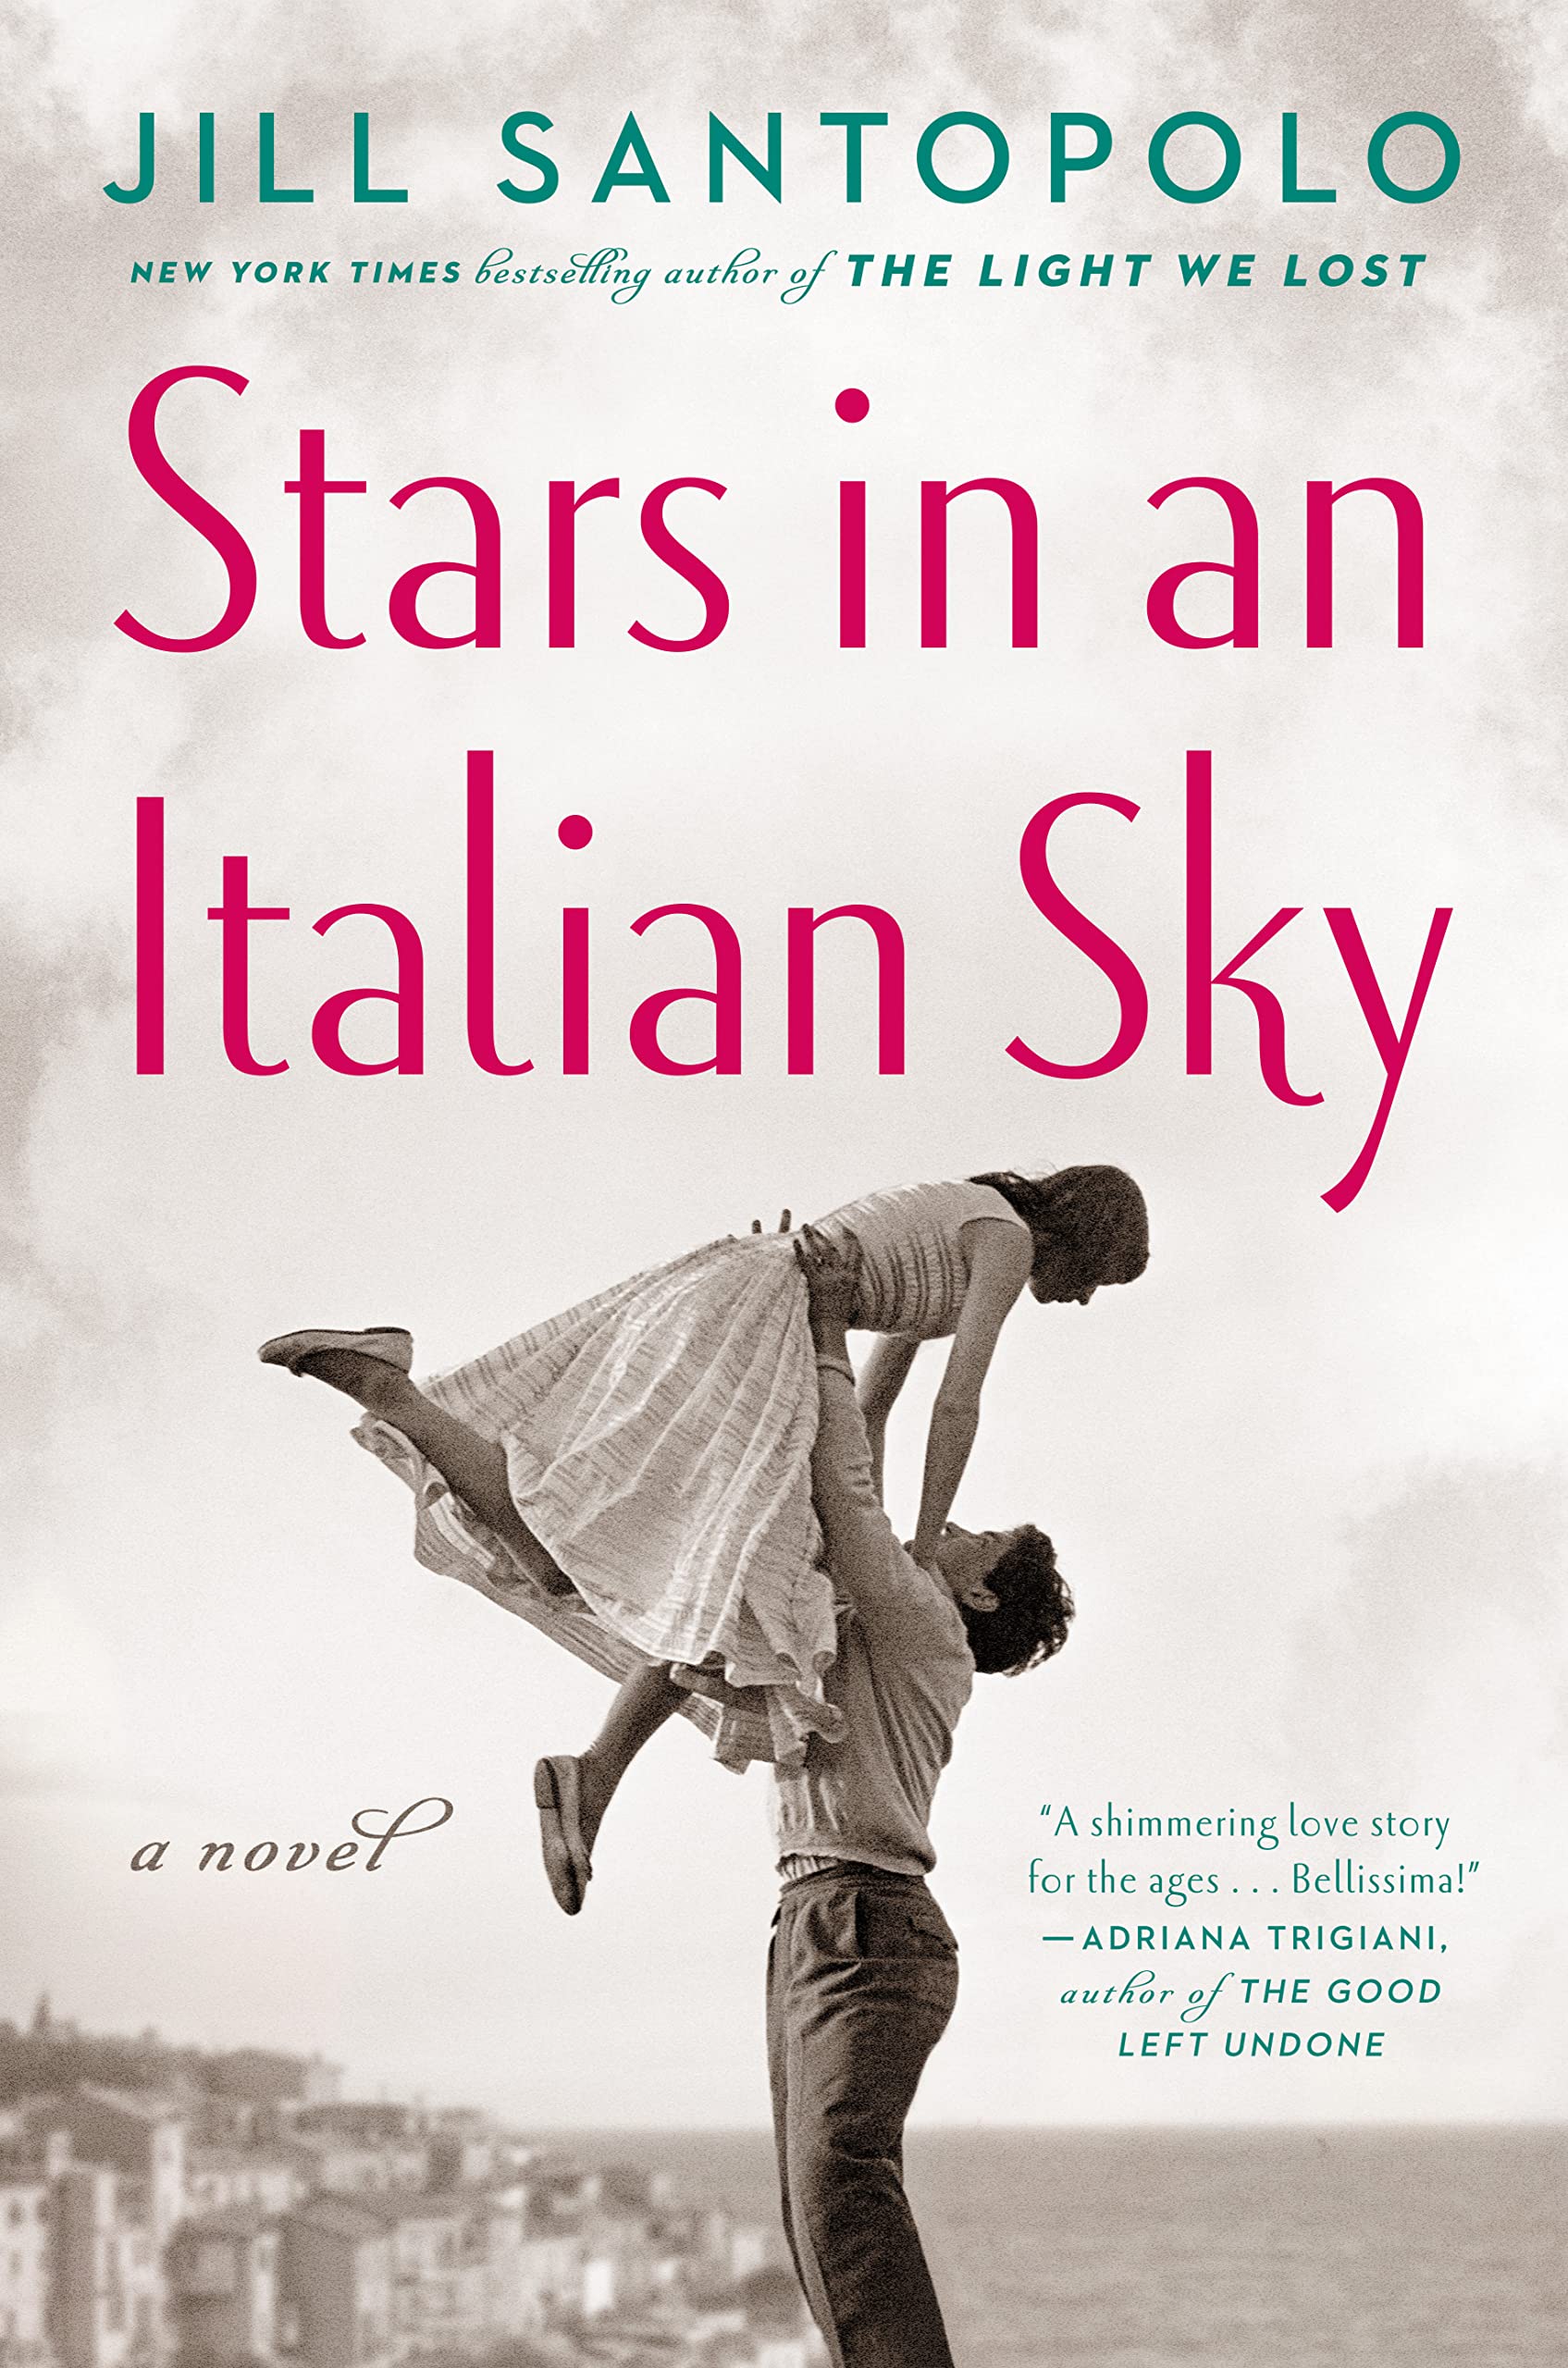 Image for "Stars in an Italian Sky"